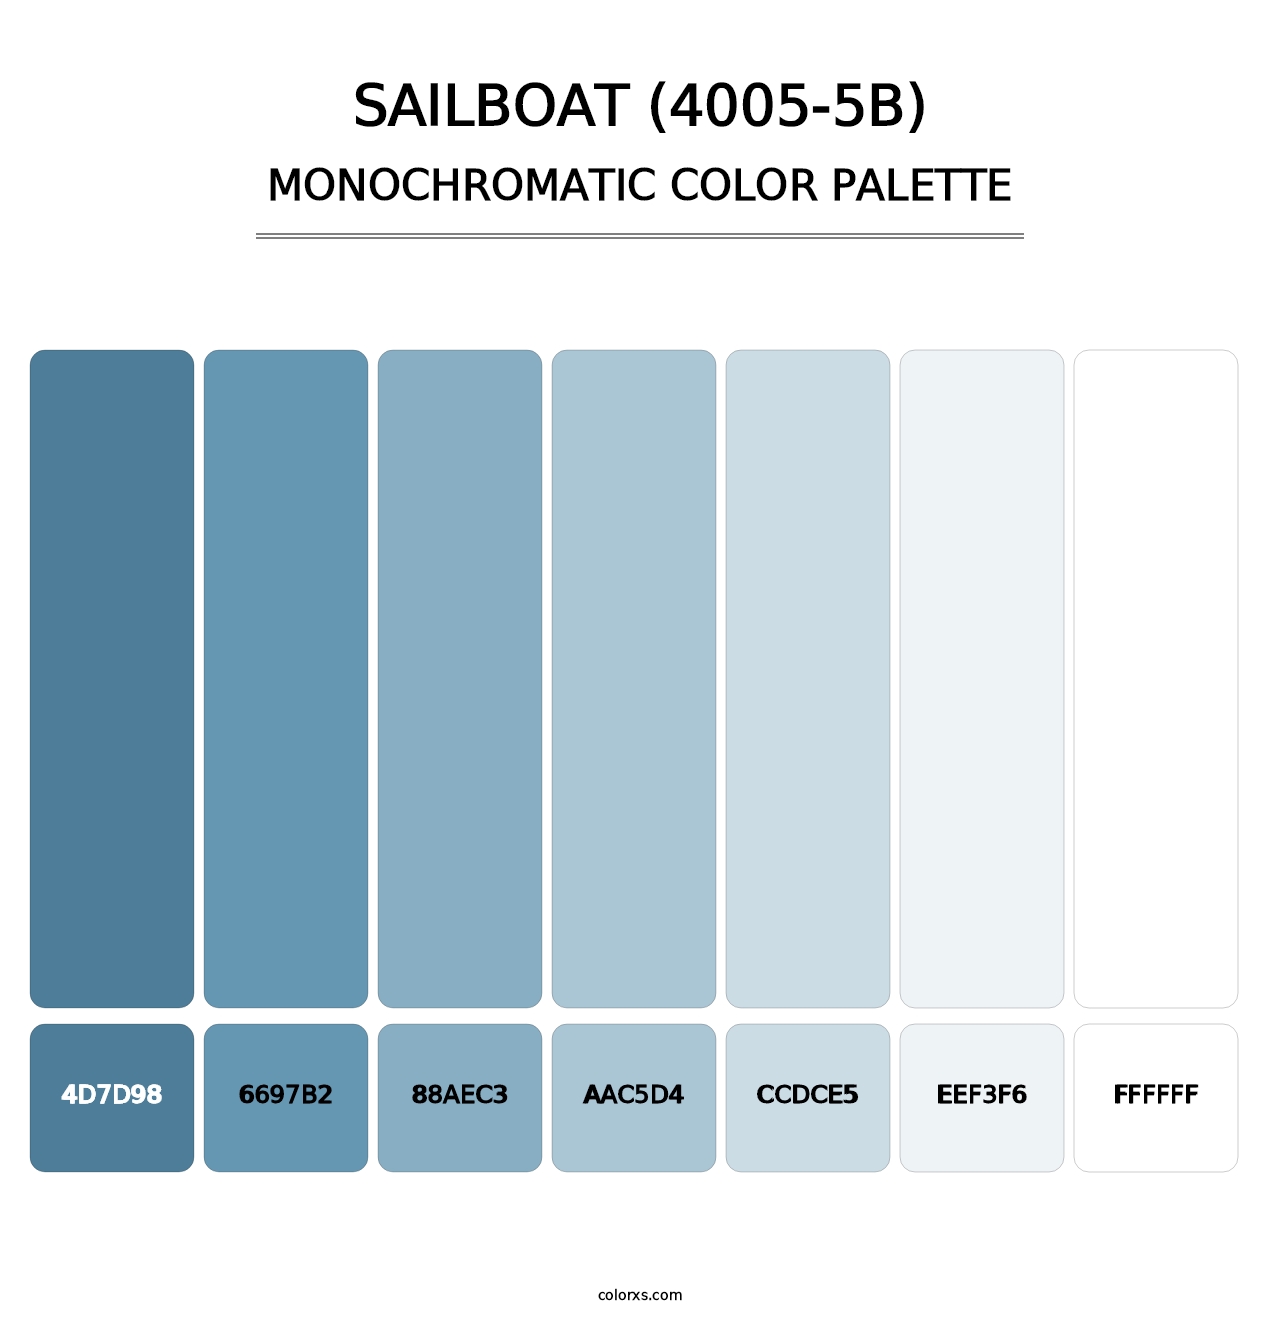 Sailboat (4005-5B) - Monochromatic Color Palette